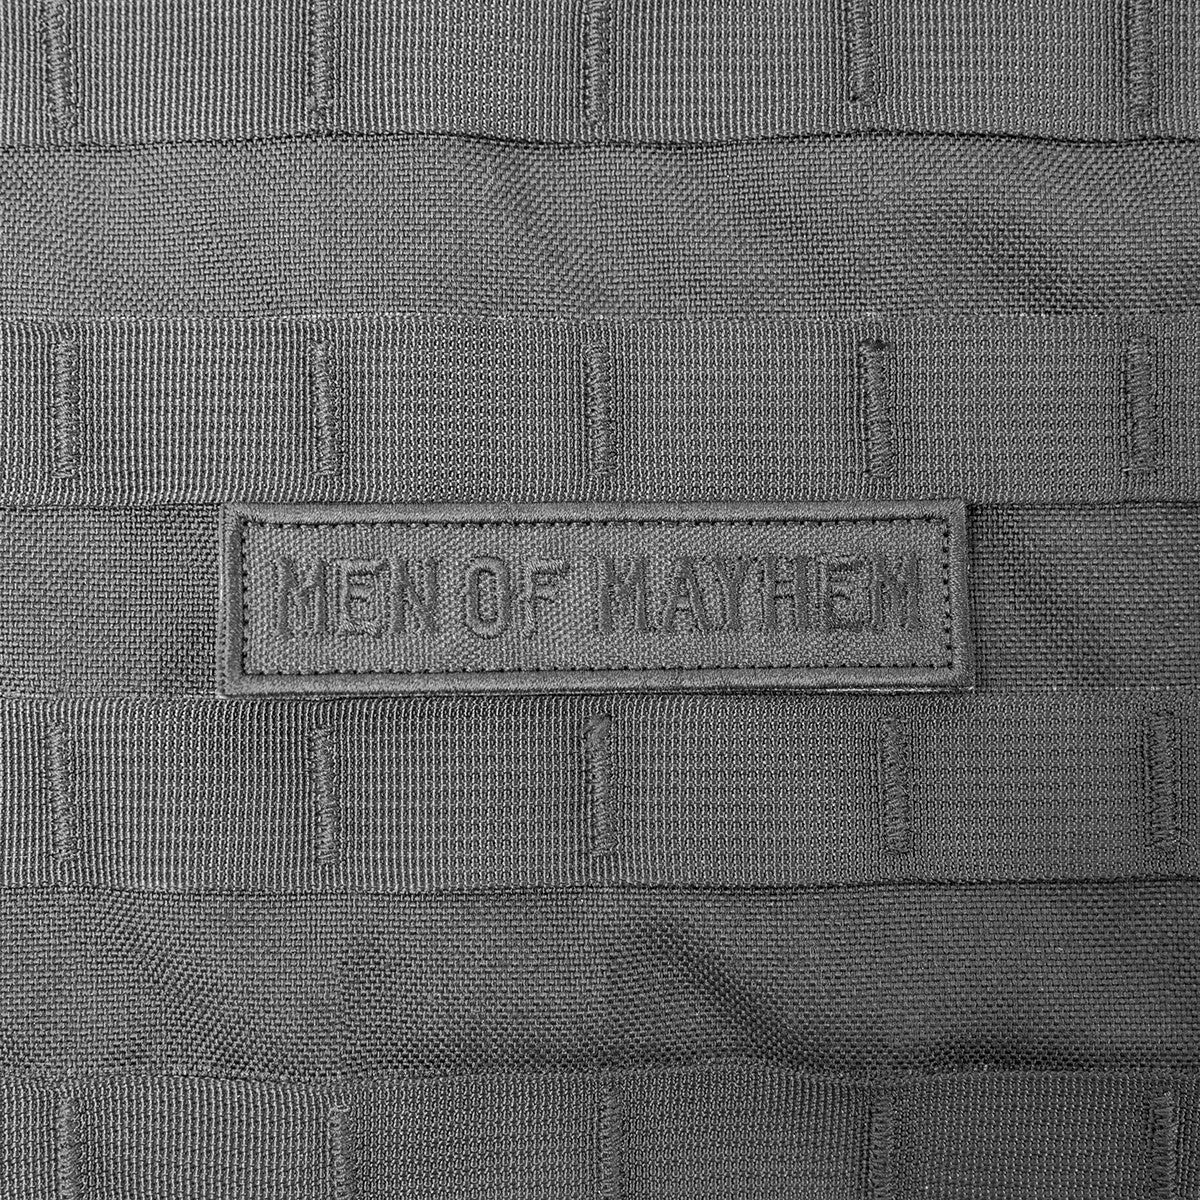 Men of mayhem patch